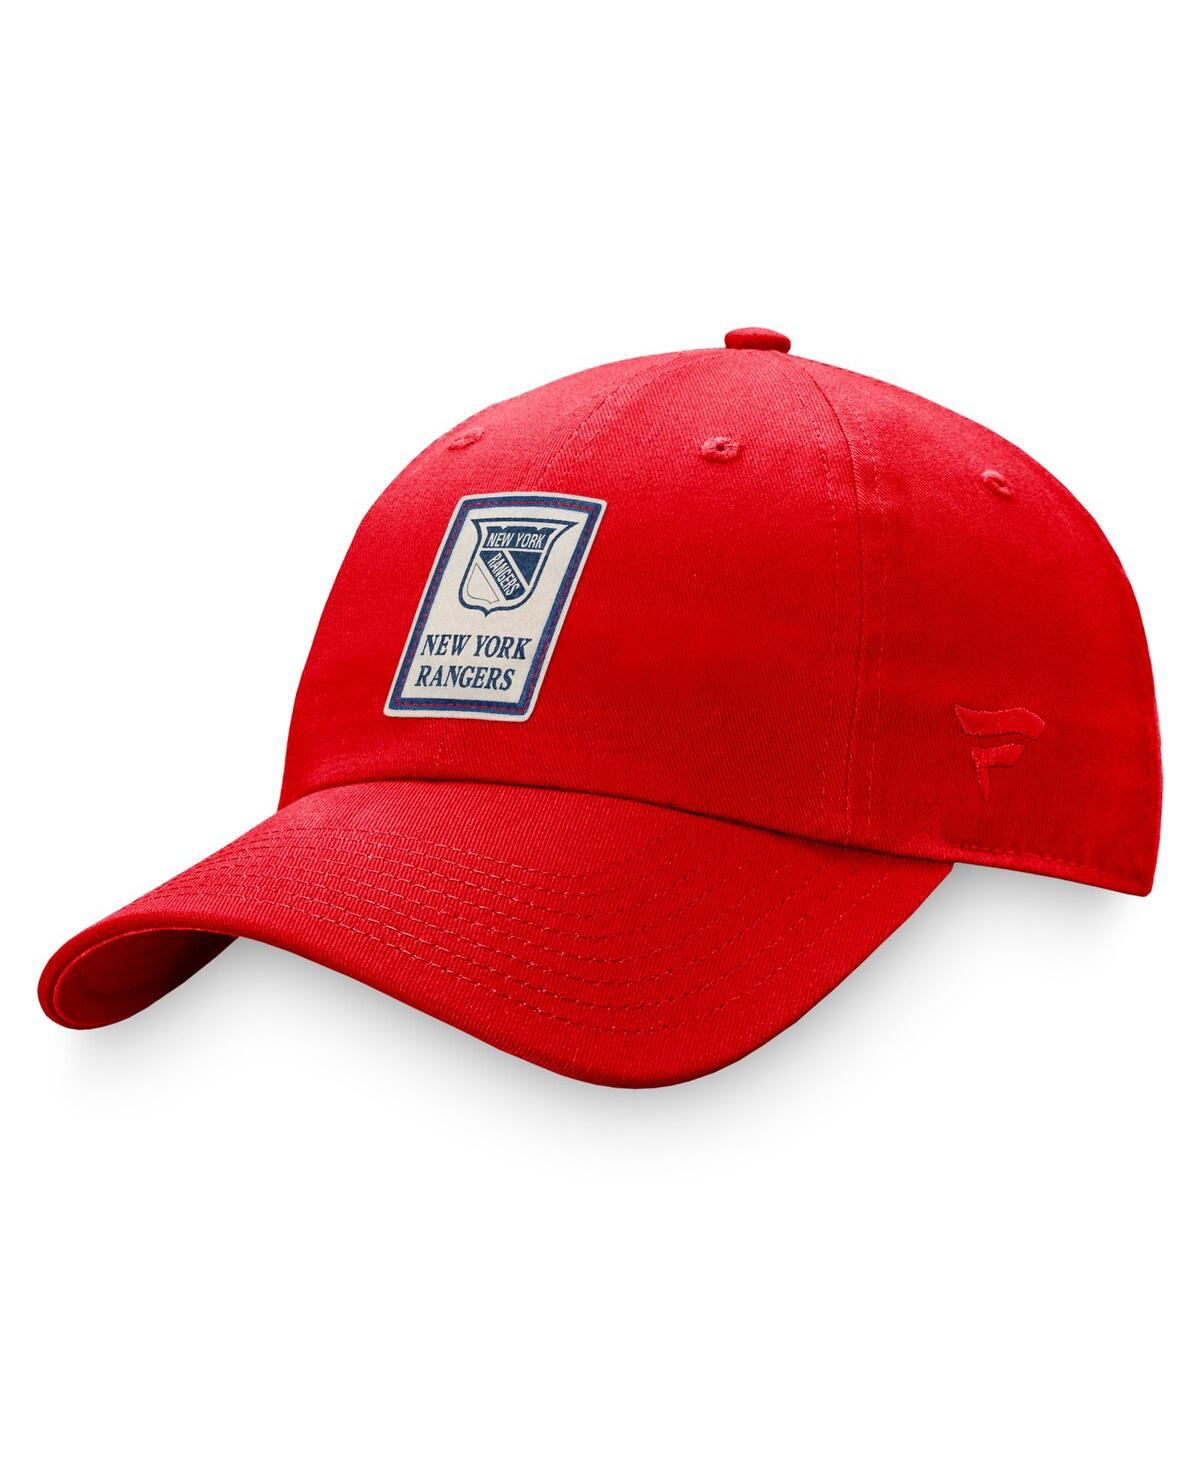 Branded Women's Red New York Rangers Heritage Vintage-Like Adjustable Hat - Athltc Red